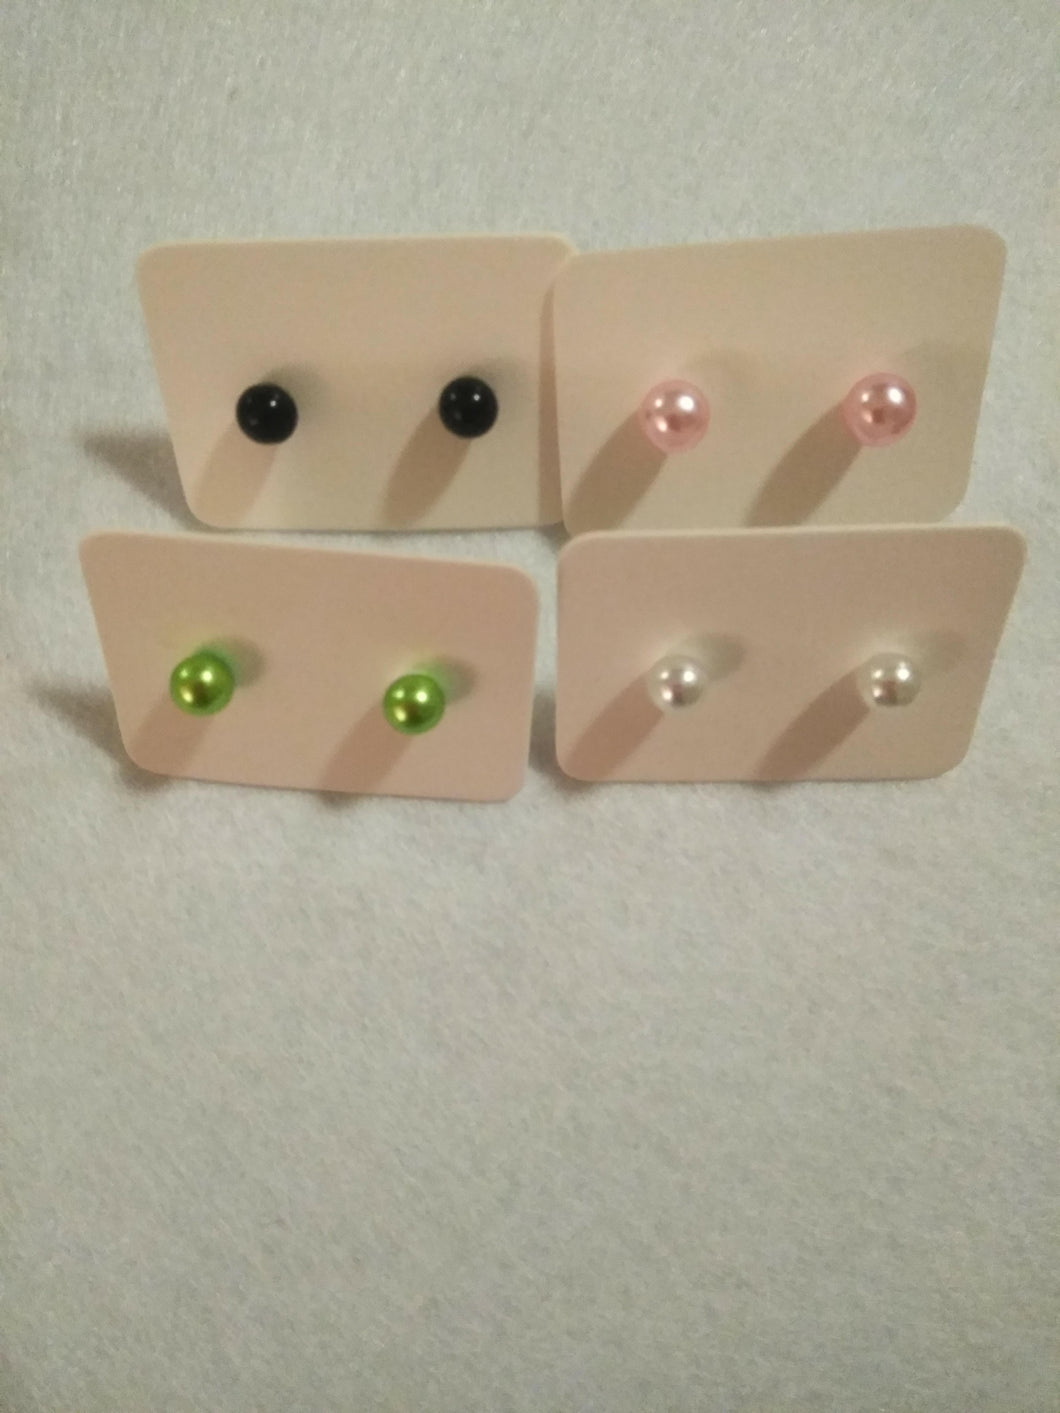 Small Ball Earrings